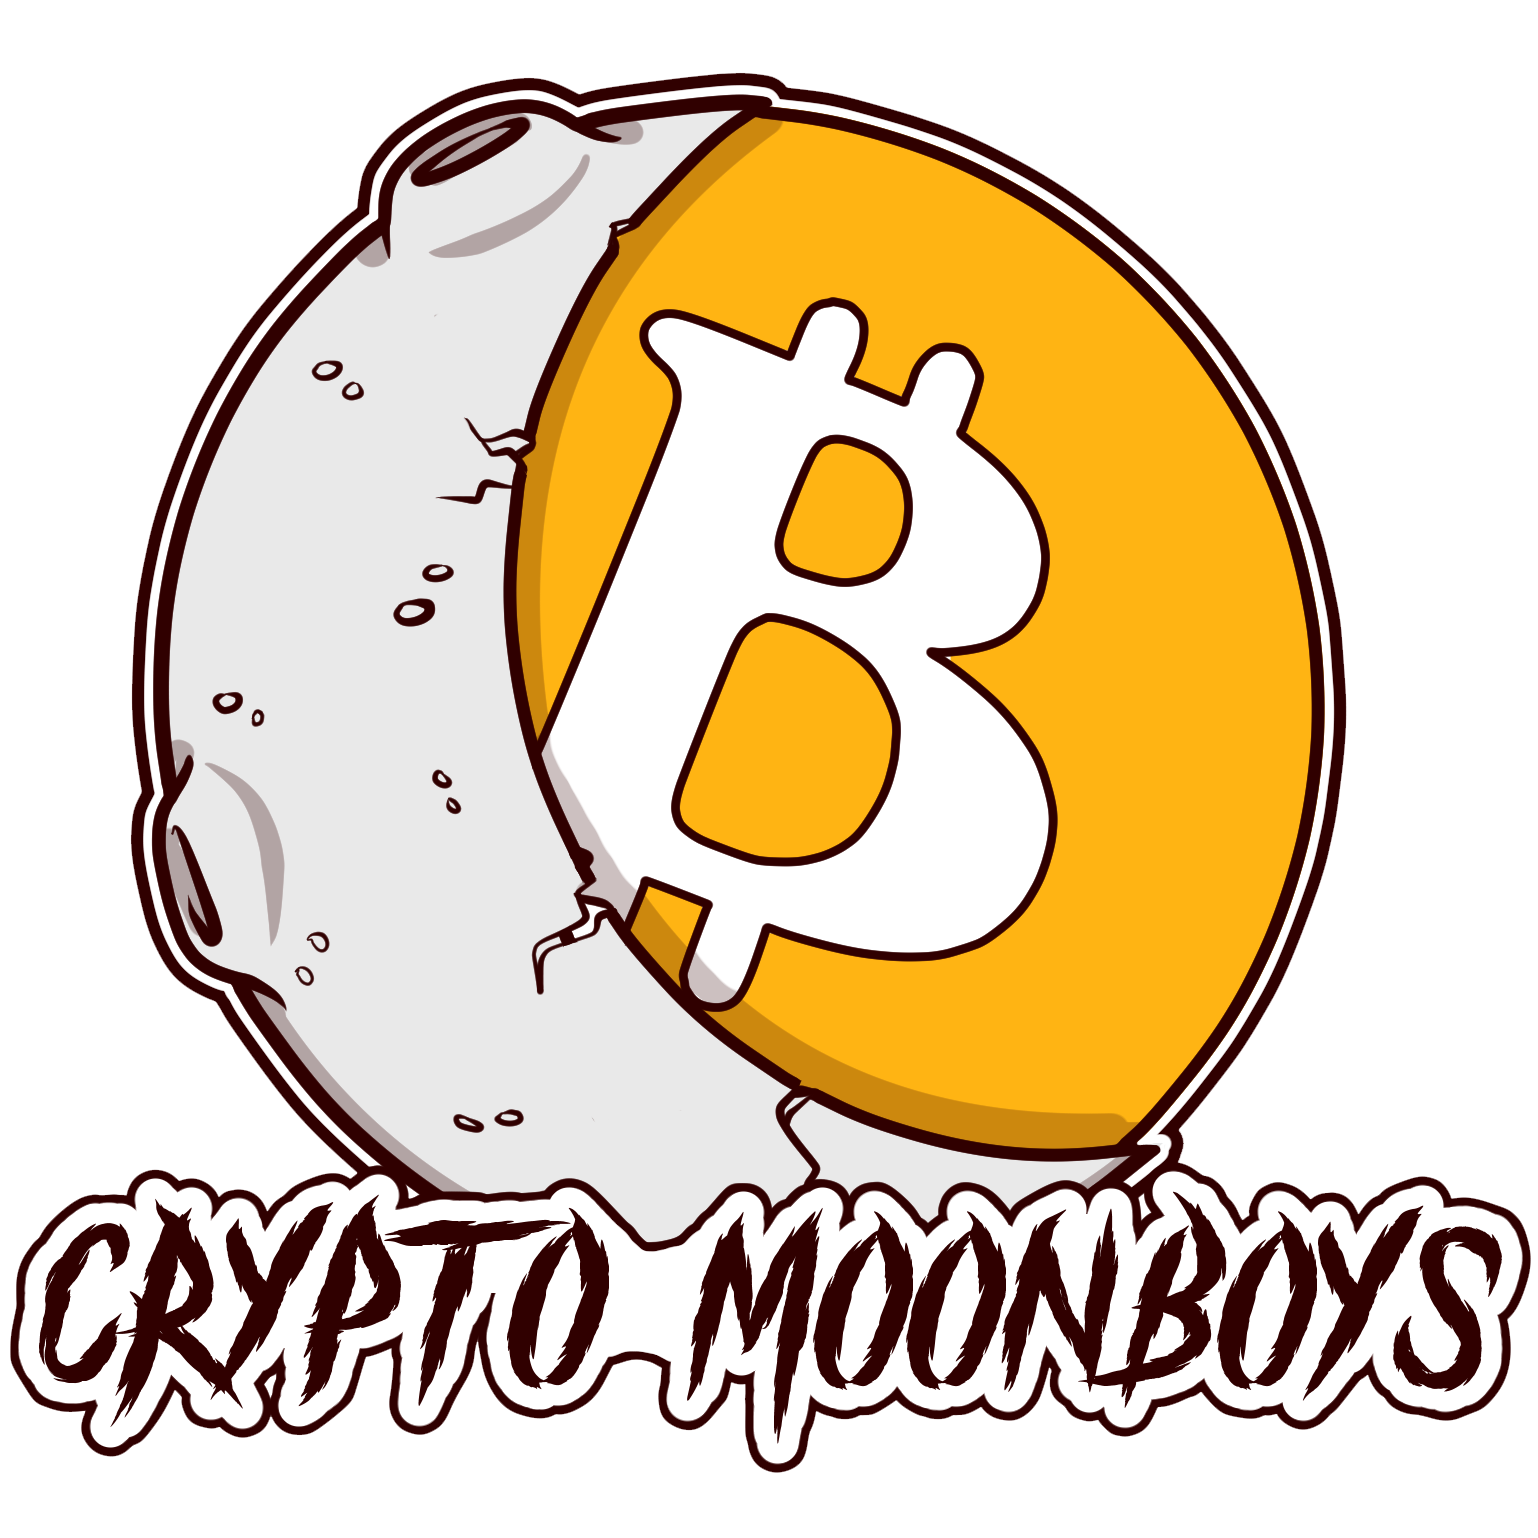 Crypto Moonboys